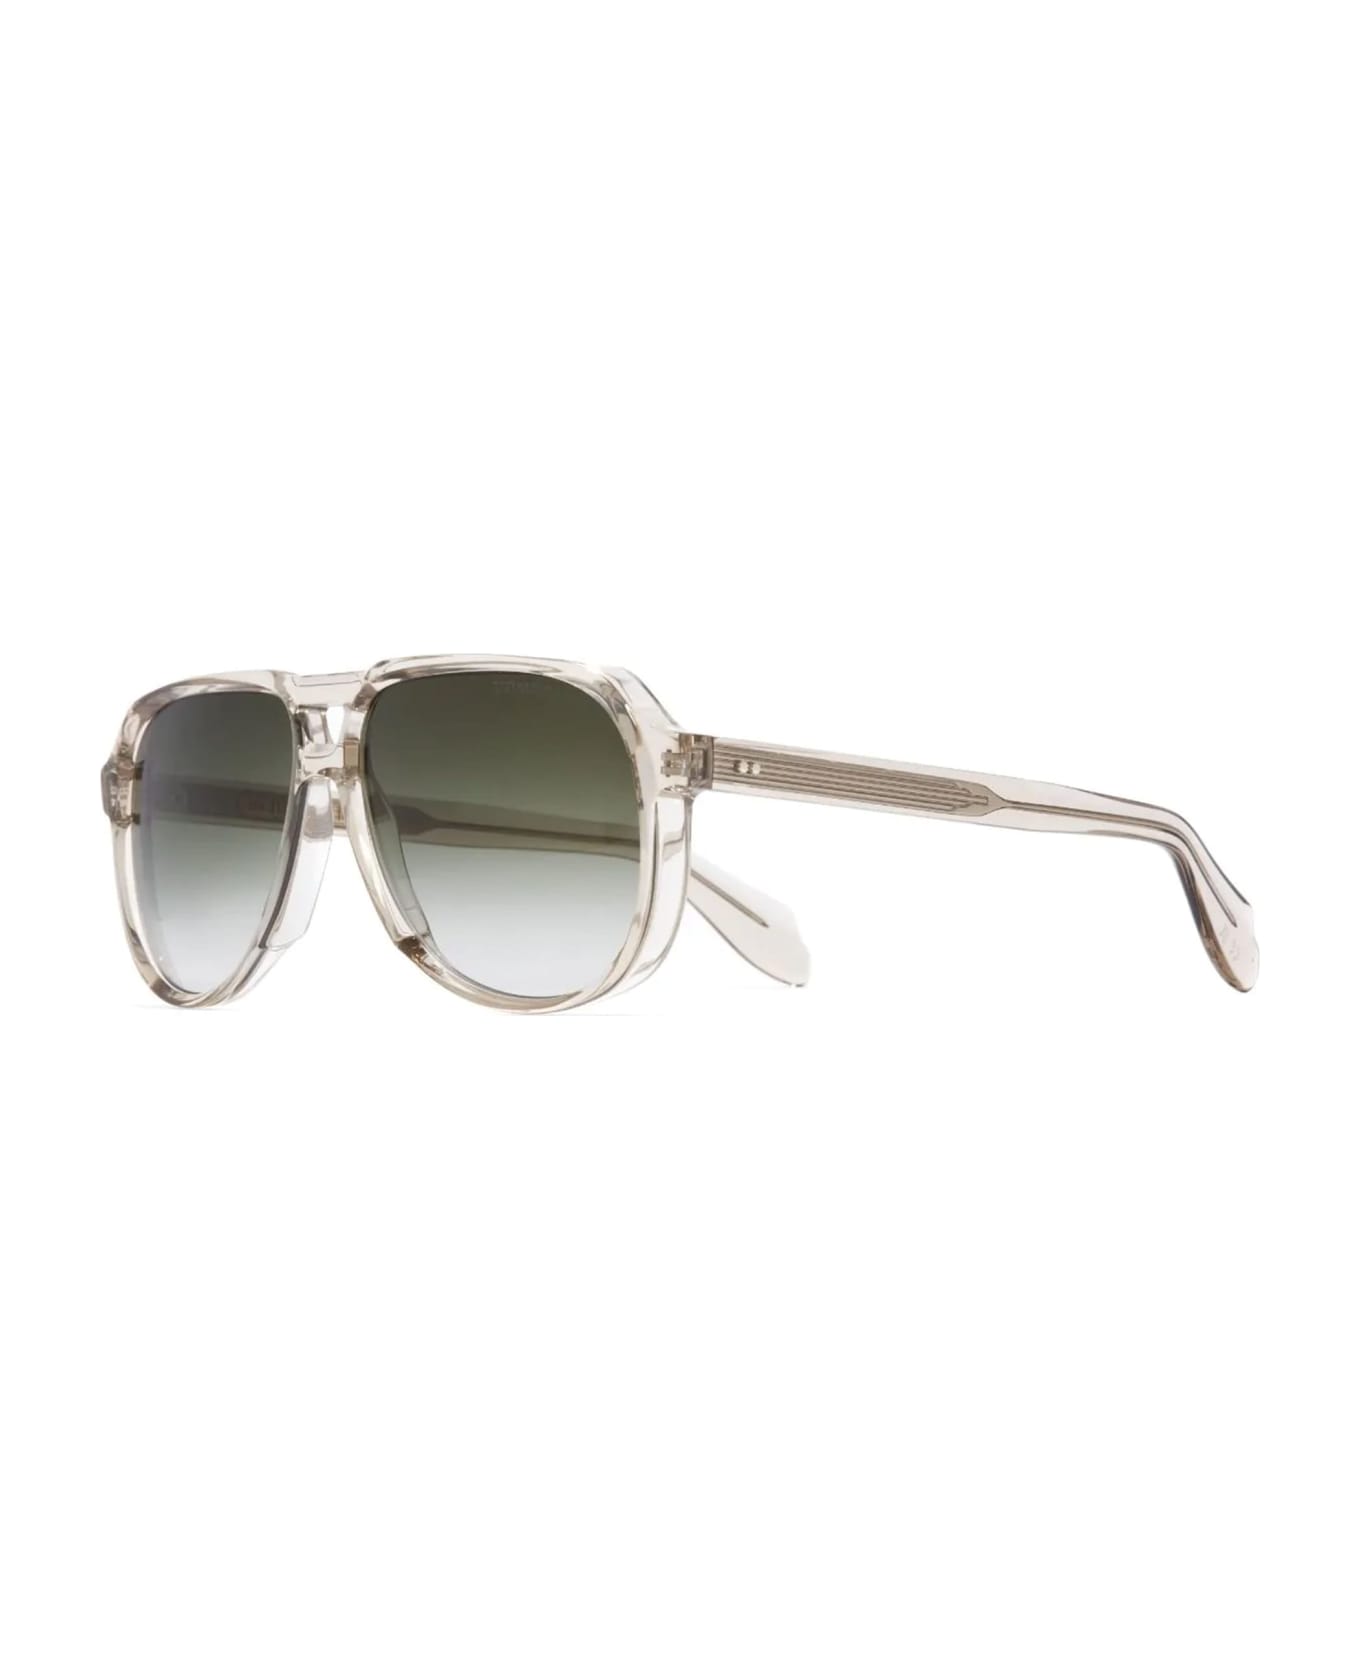 Cutler and Gross 9782-03 - Sand Crystal Sunglasses - transparent beige サングラス